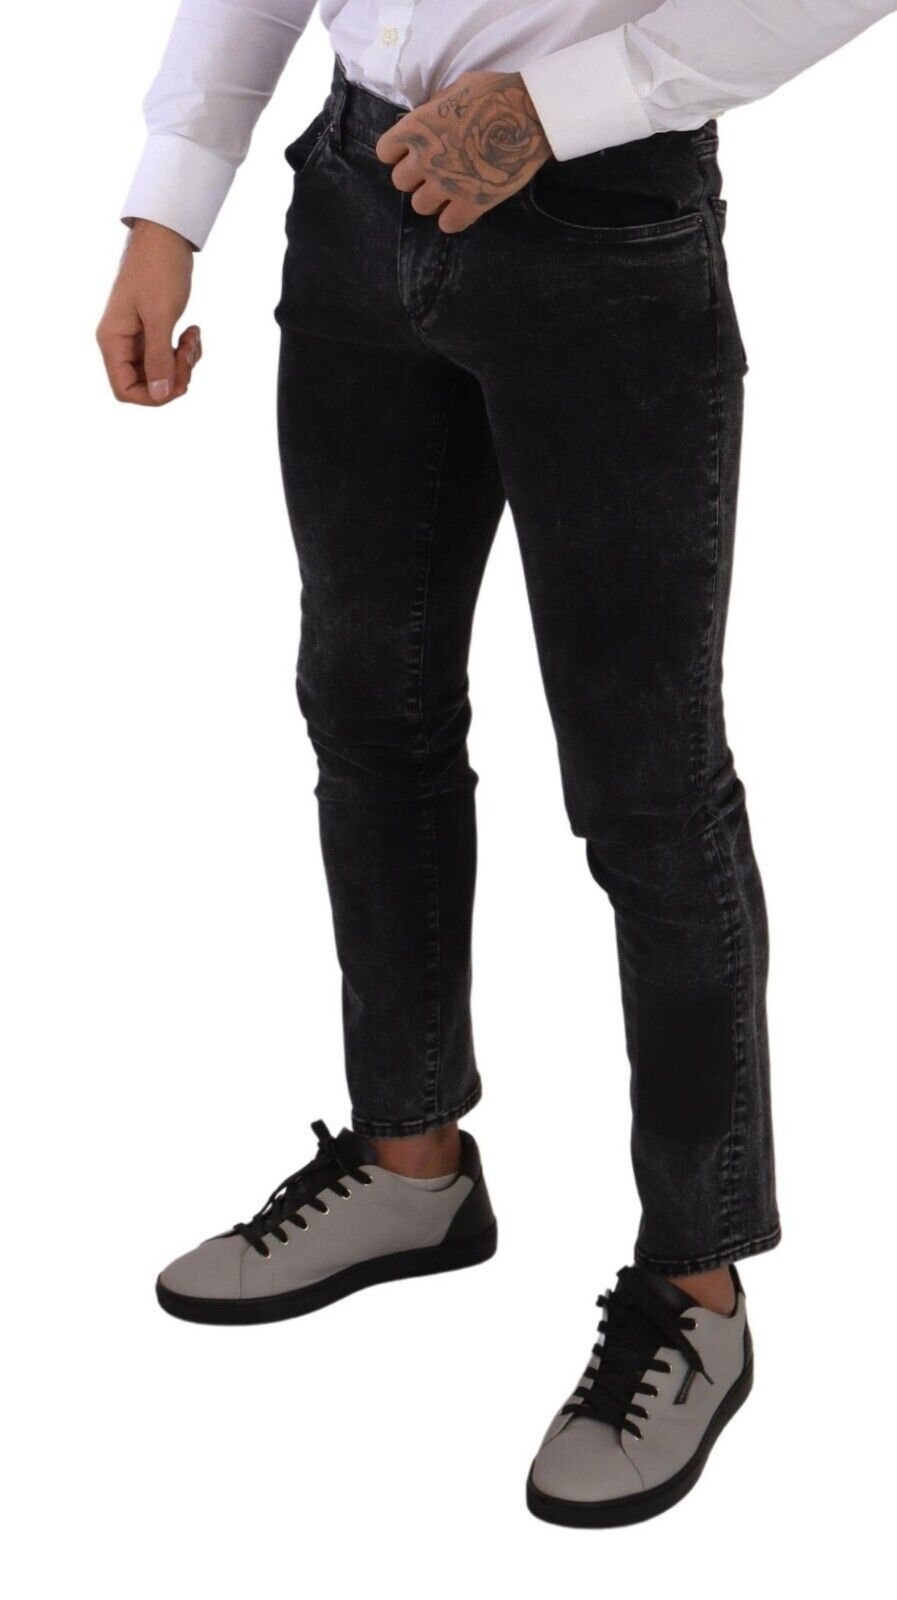 Sleek Slim-Fit Designer Jeans in Black Gray